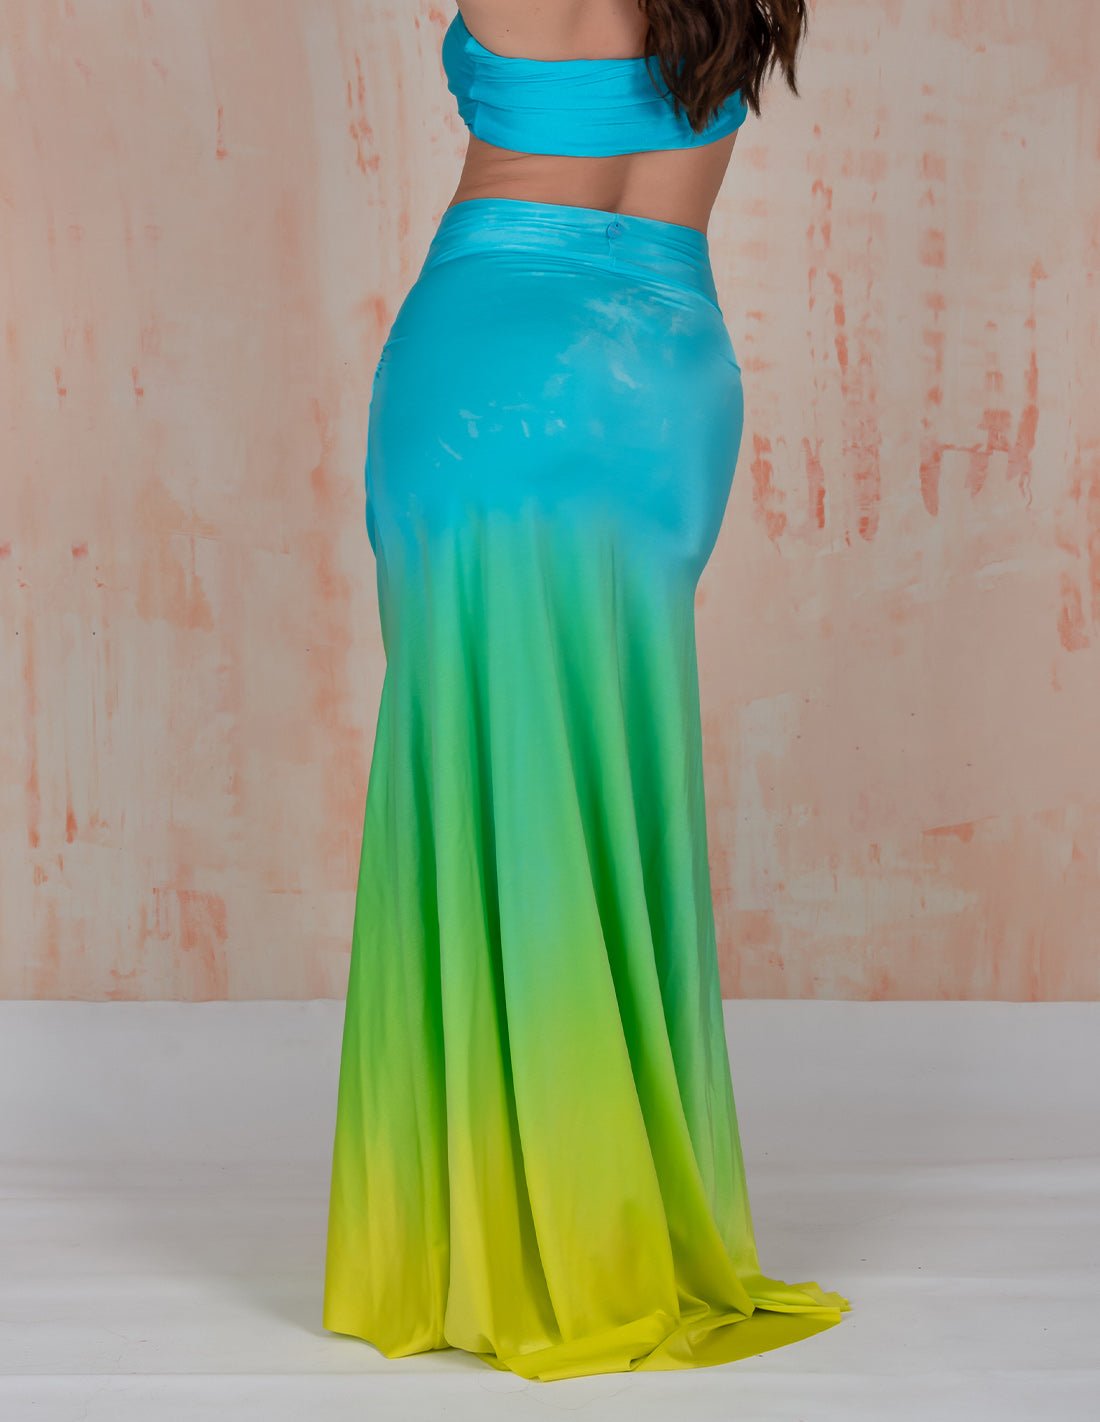 Regalia Skirt Sky Blue + Green + Yellow - Skirt - Entreaguas Wearable Art